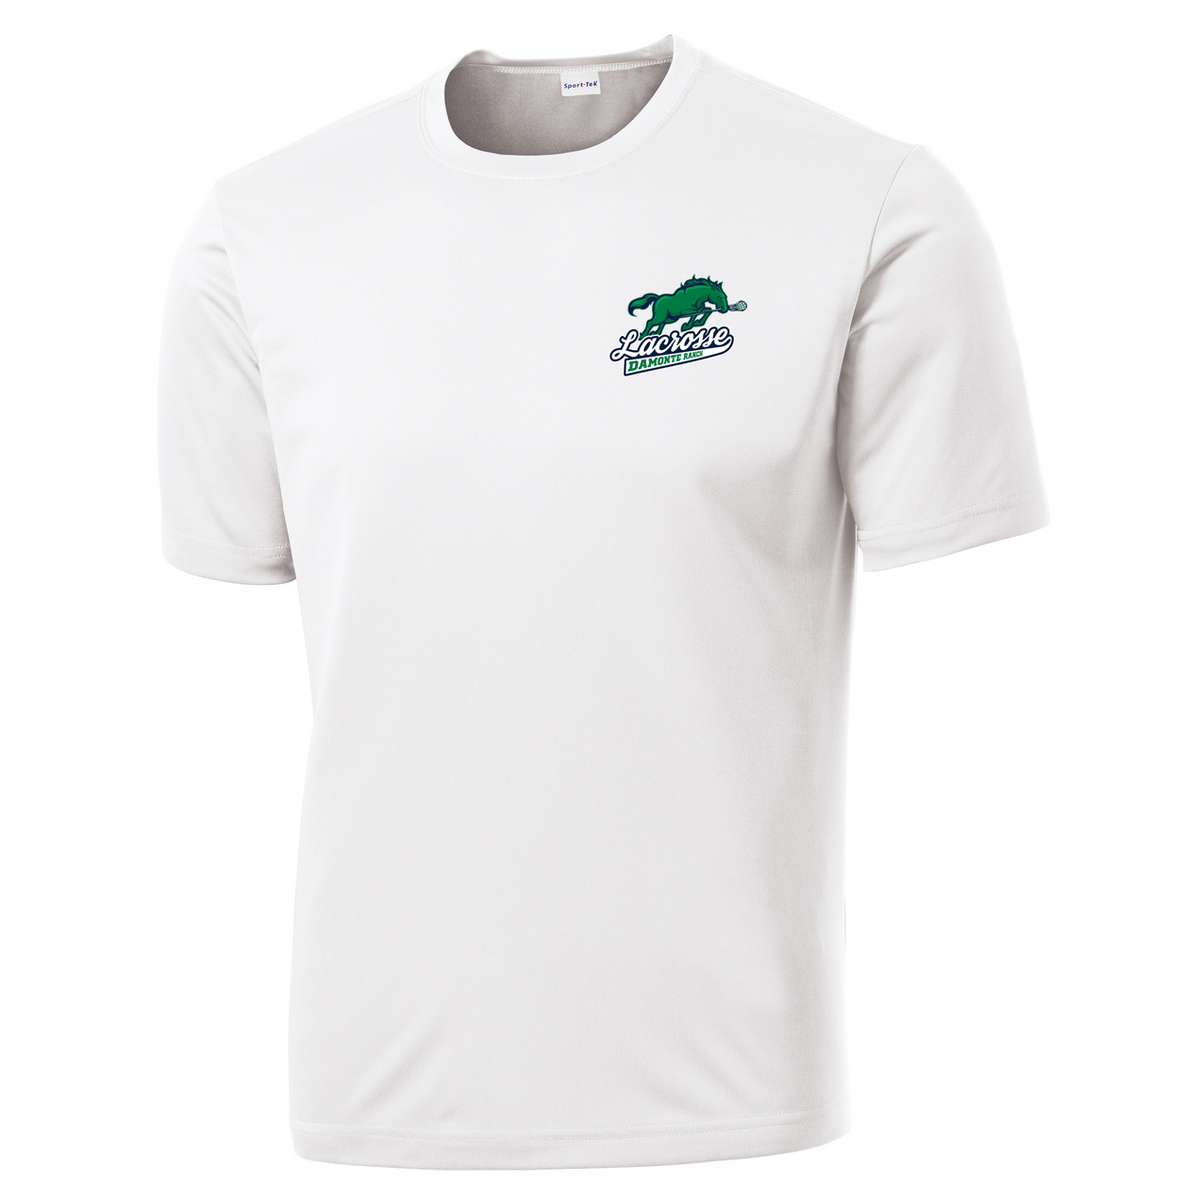 Damonte Ranch Lacrosse Performance T-Shirt